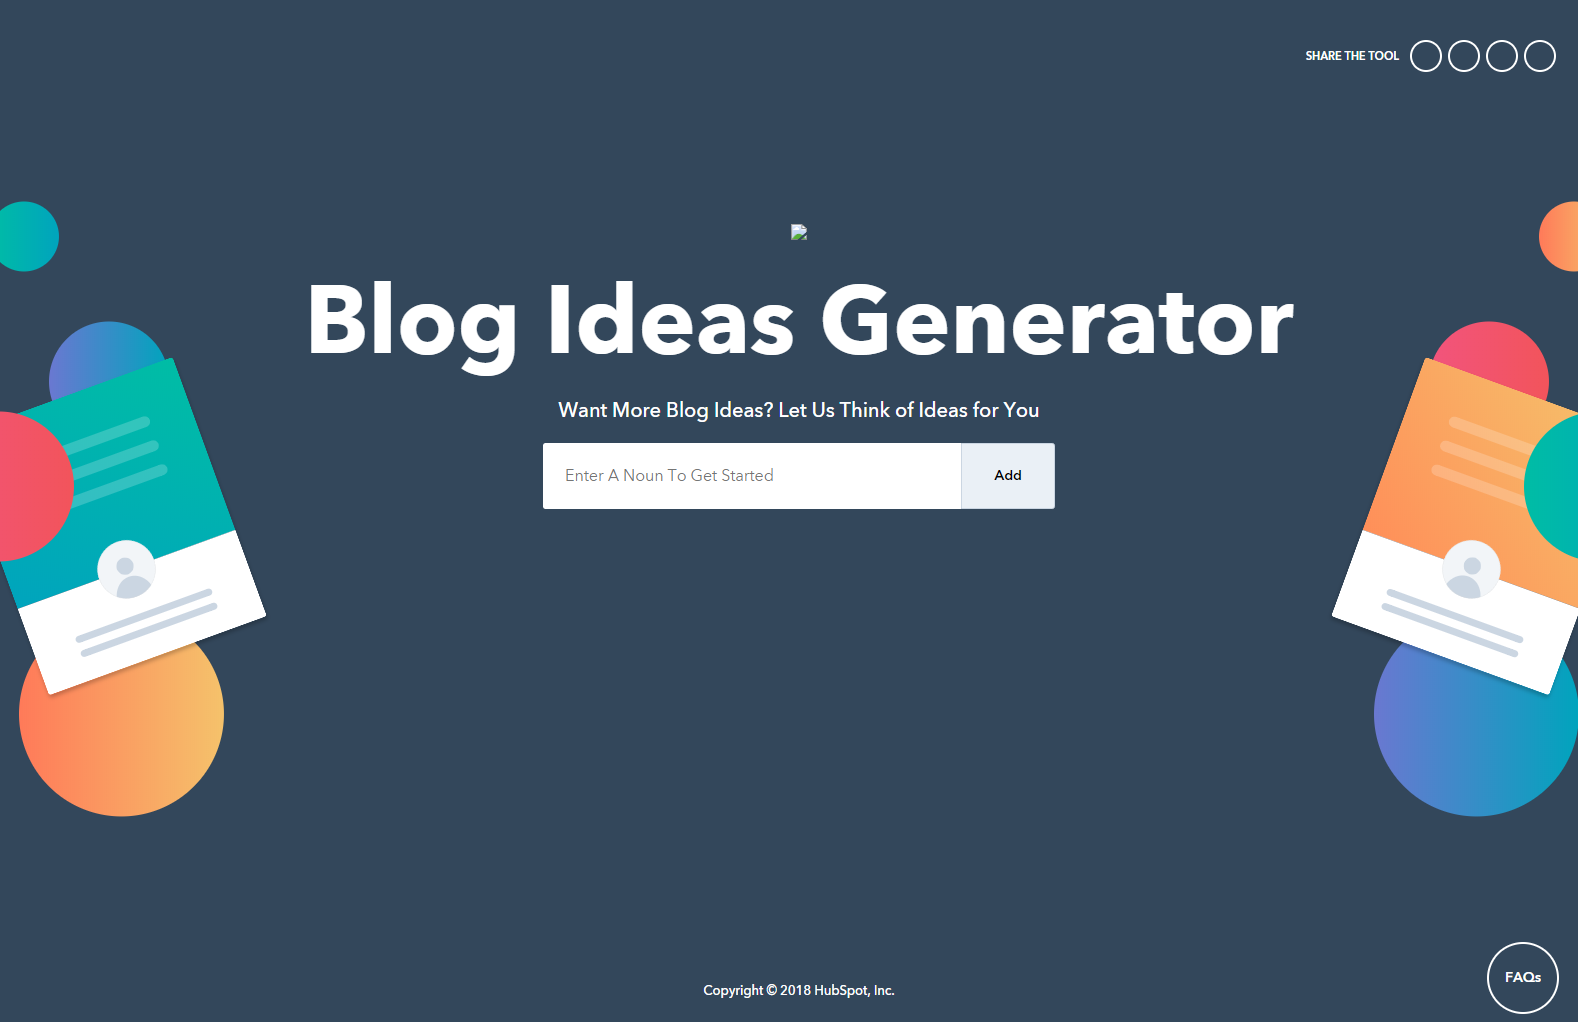 Best Blog Post Ideas Generator online is HubSpot's Blog Idea Generator